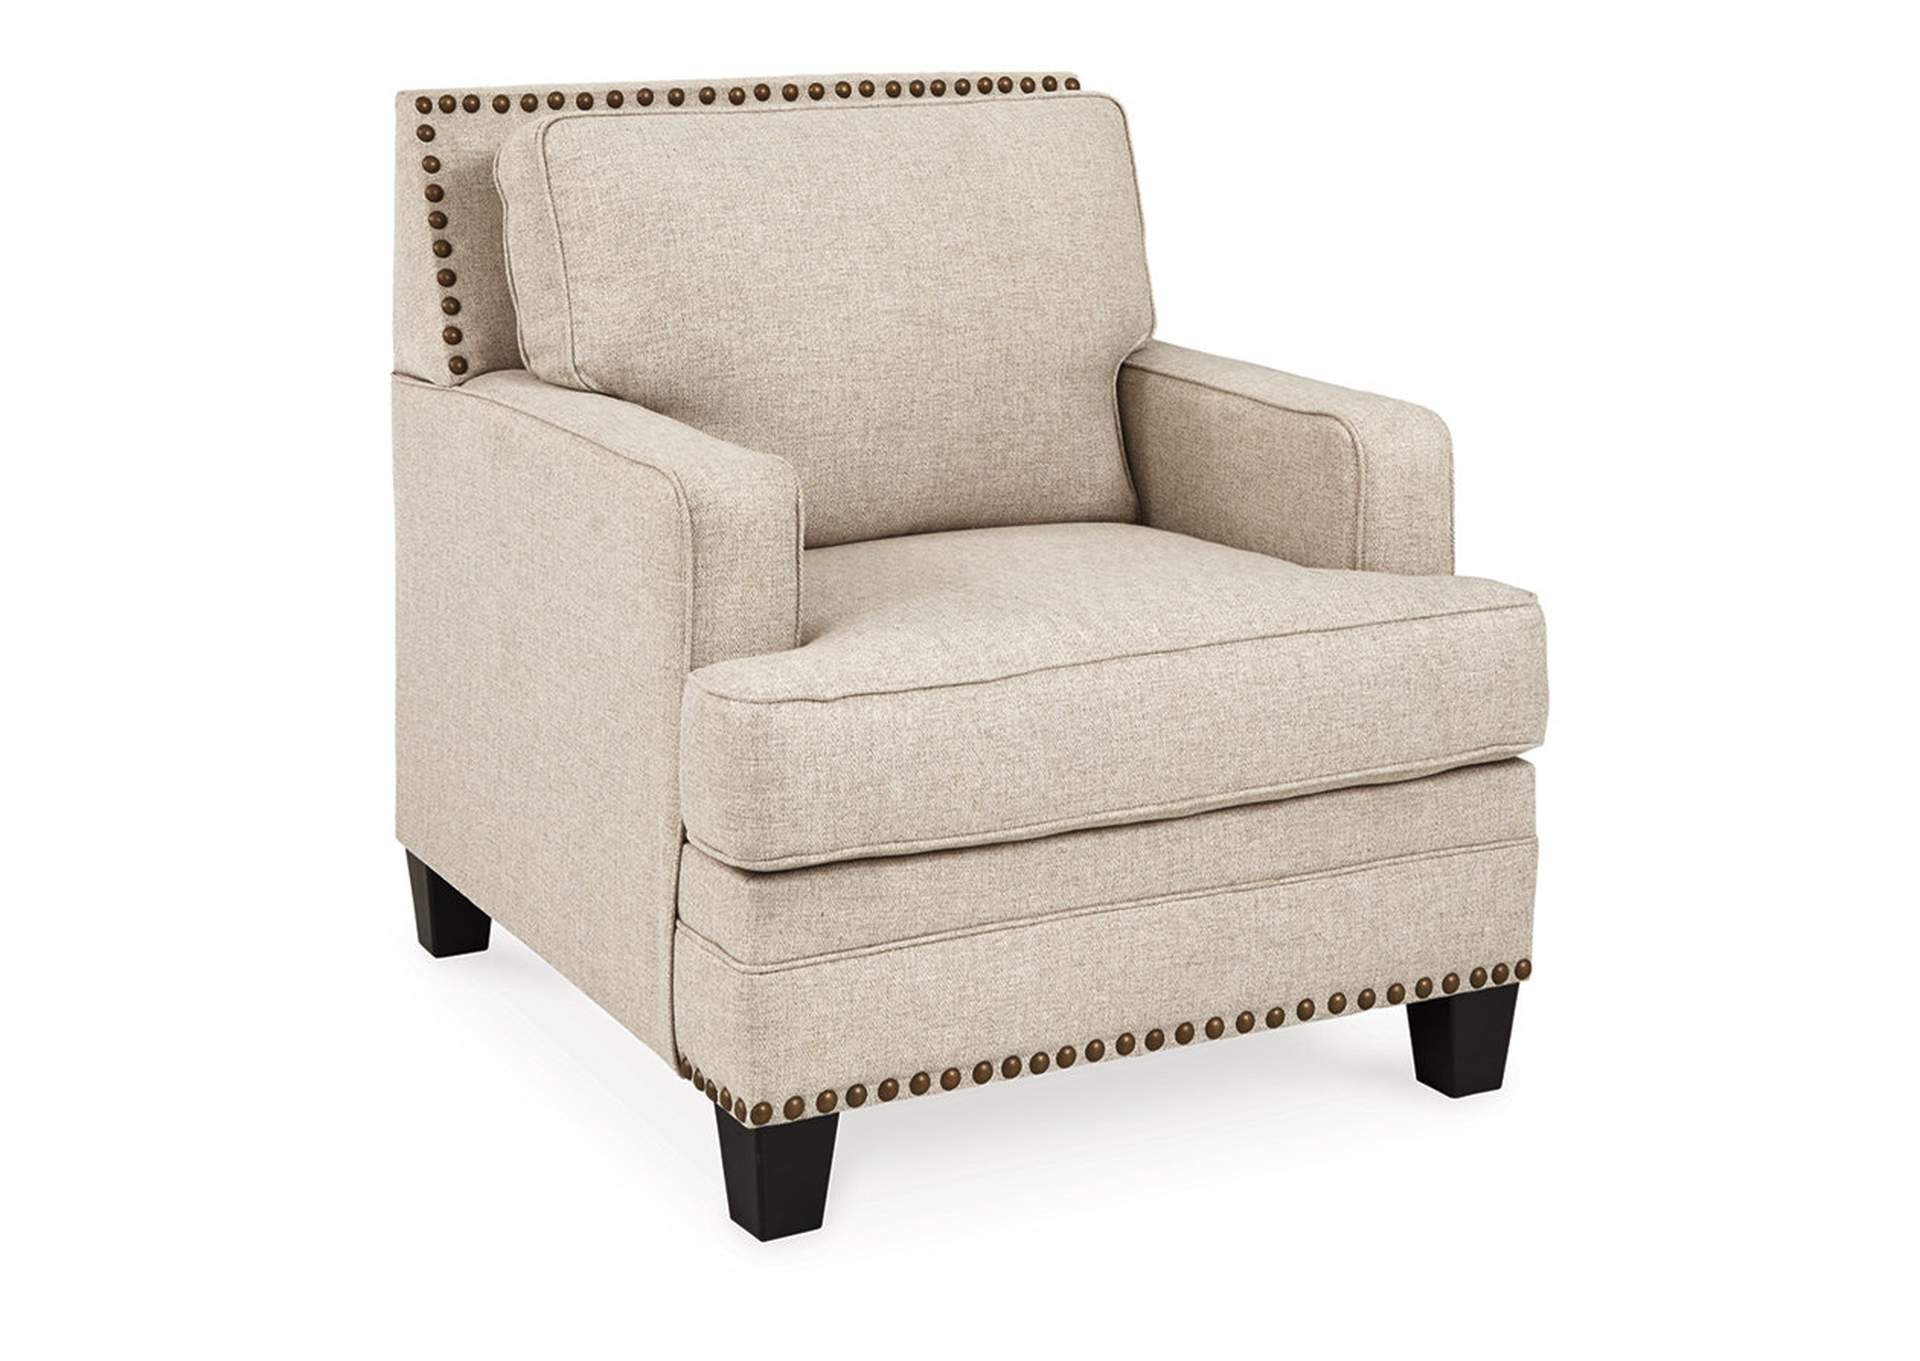 Claredon Sofa, Loveseat, Chair and Ottoman,Benchcraft